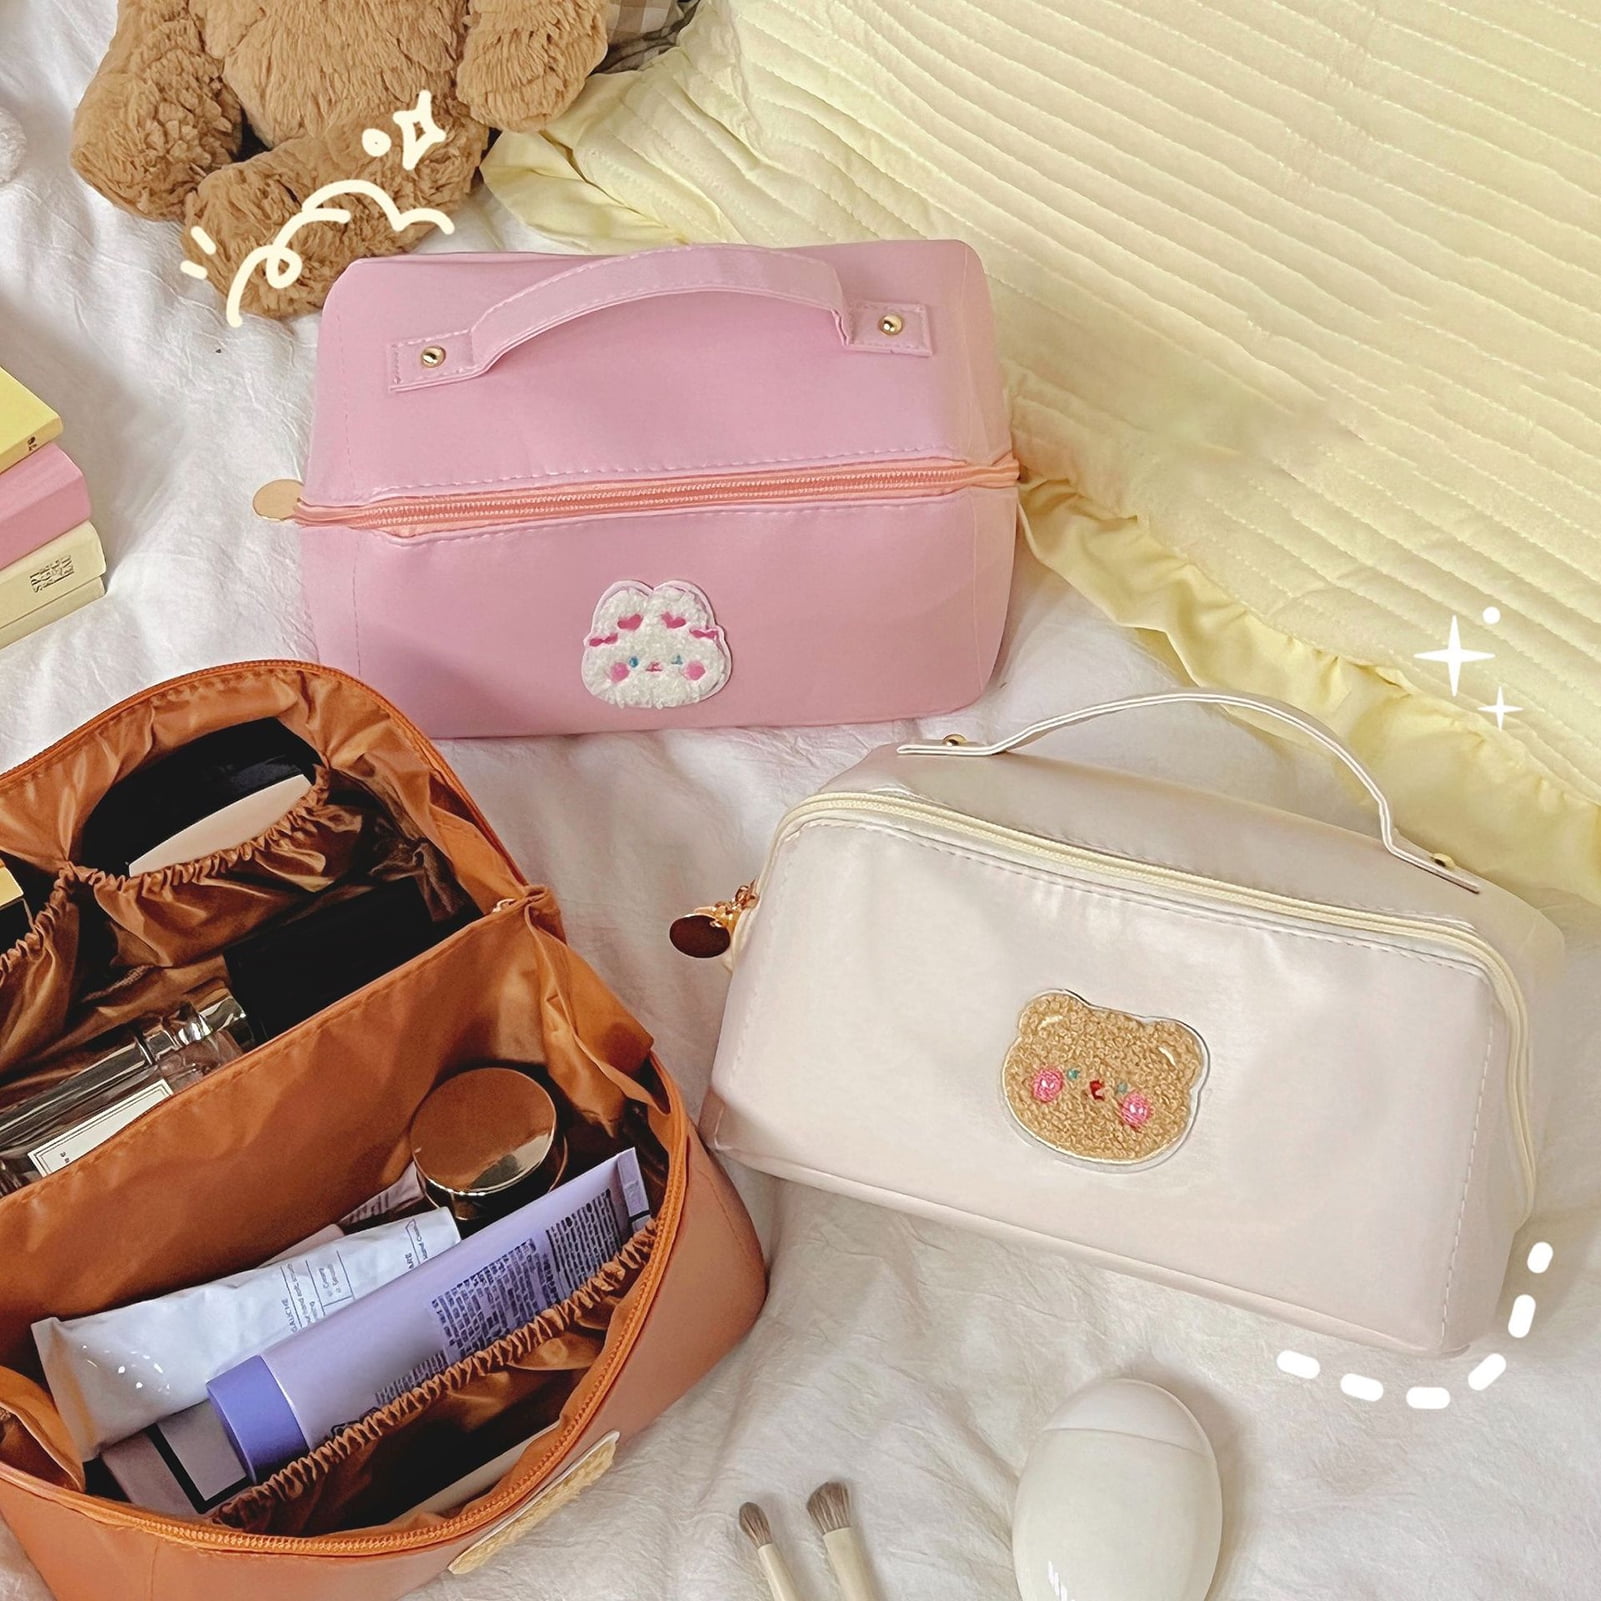 Narwey Travel Makeup Bag Large Cosmetic Bag Makeup Case Organizer for Women